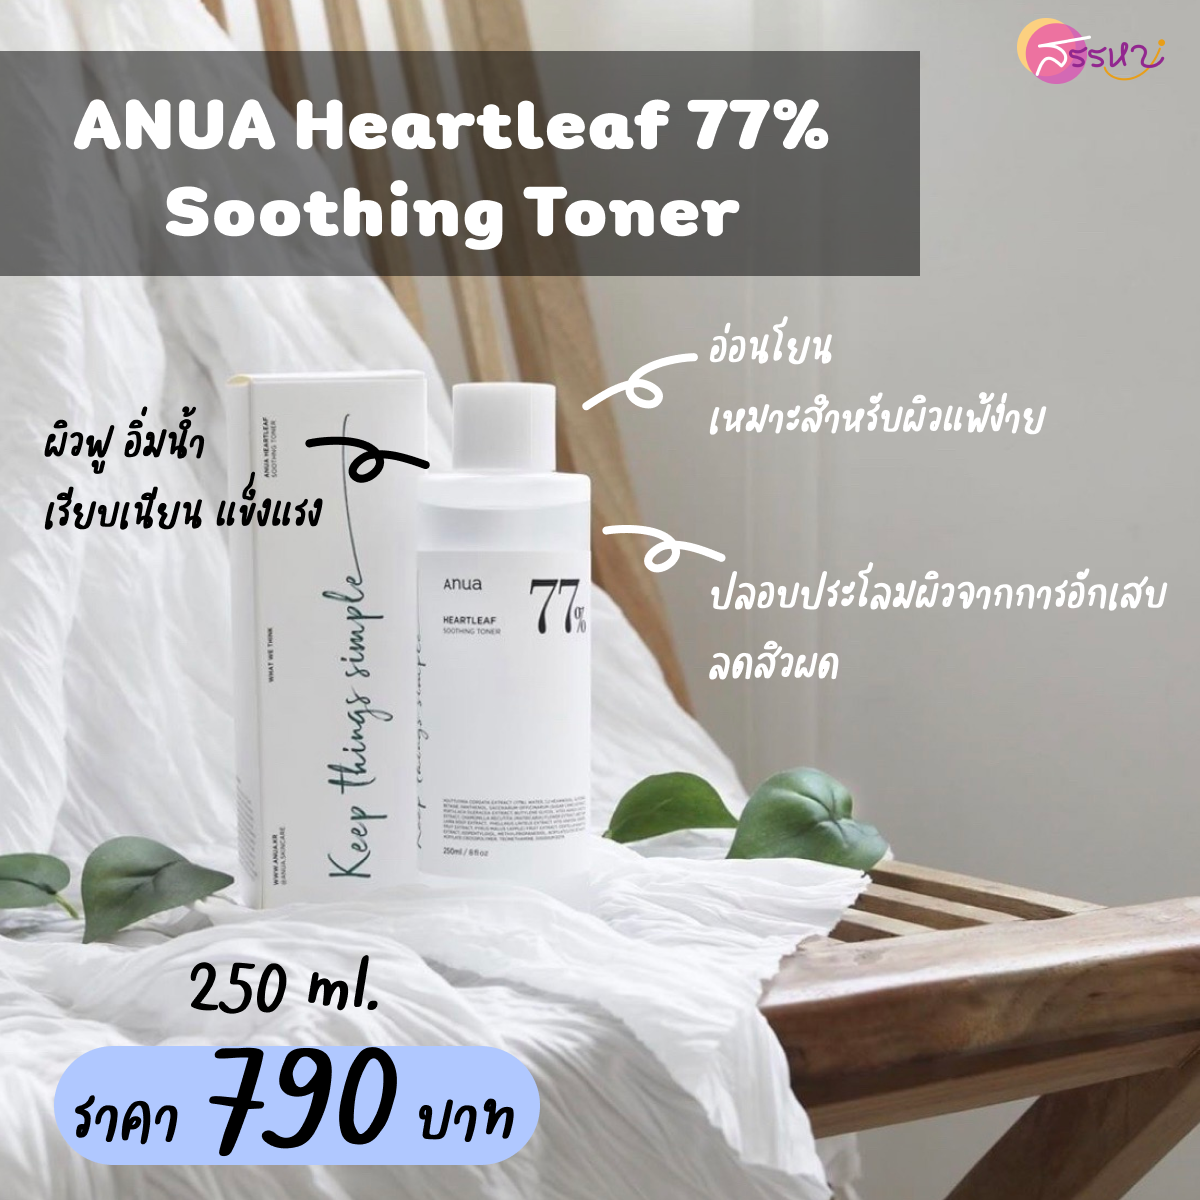 ANUA Heartleaf 77% Soothing Toner